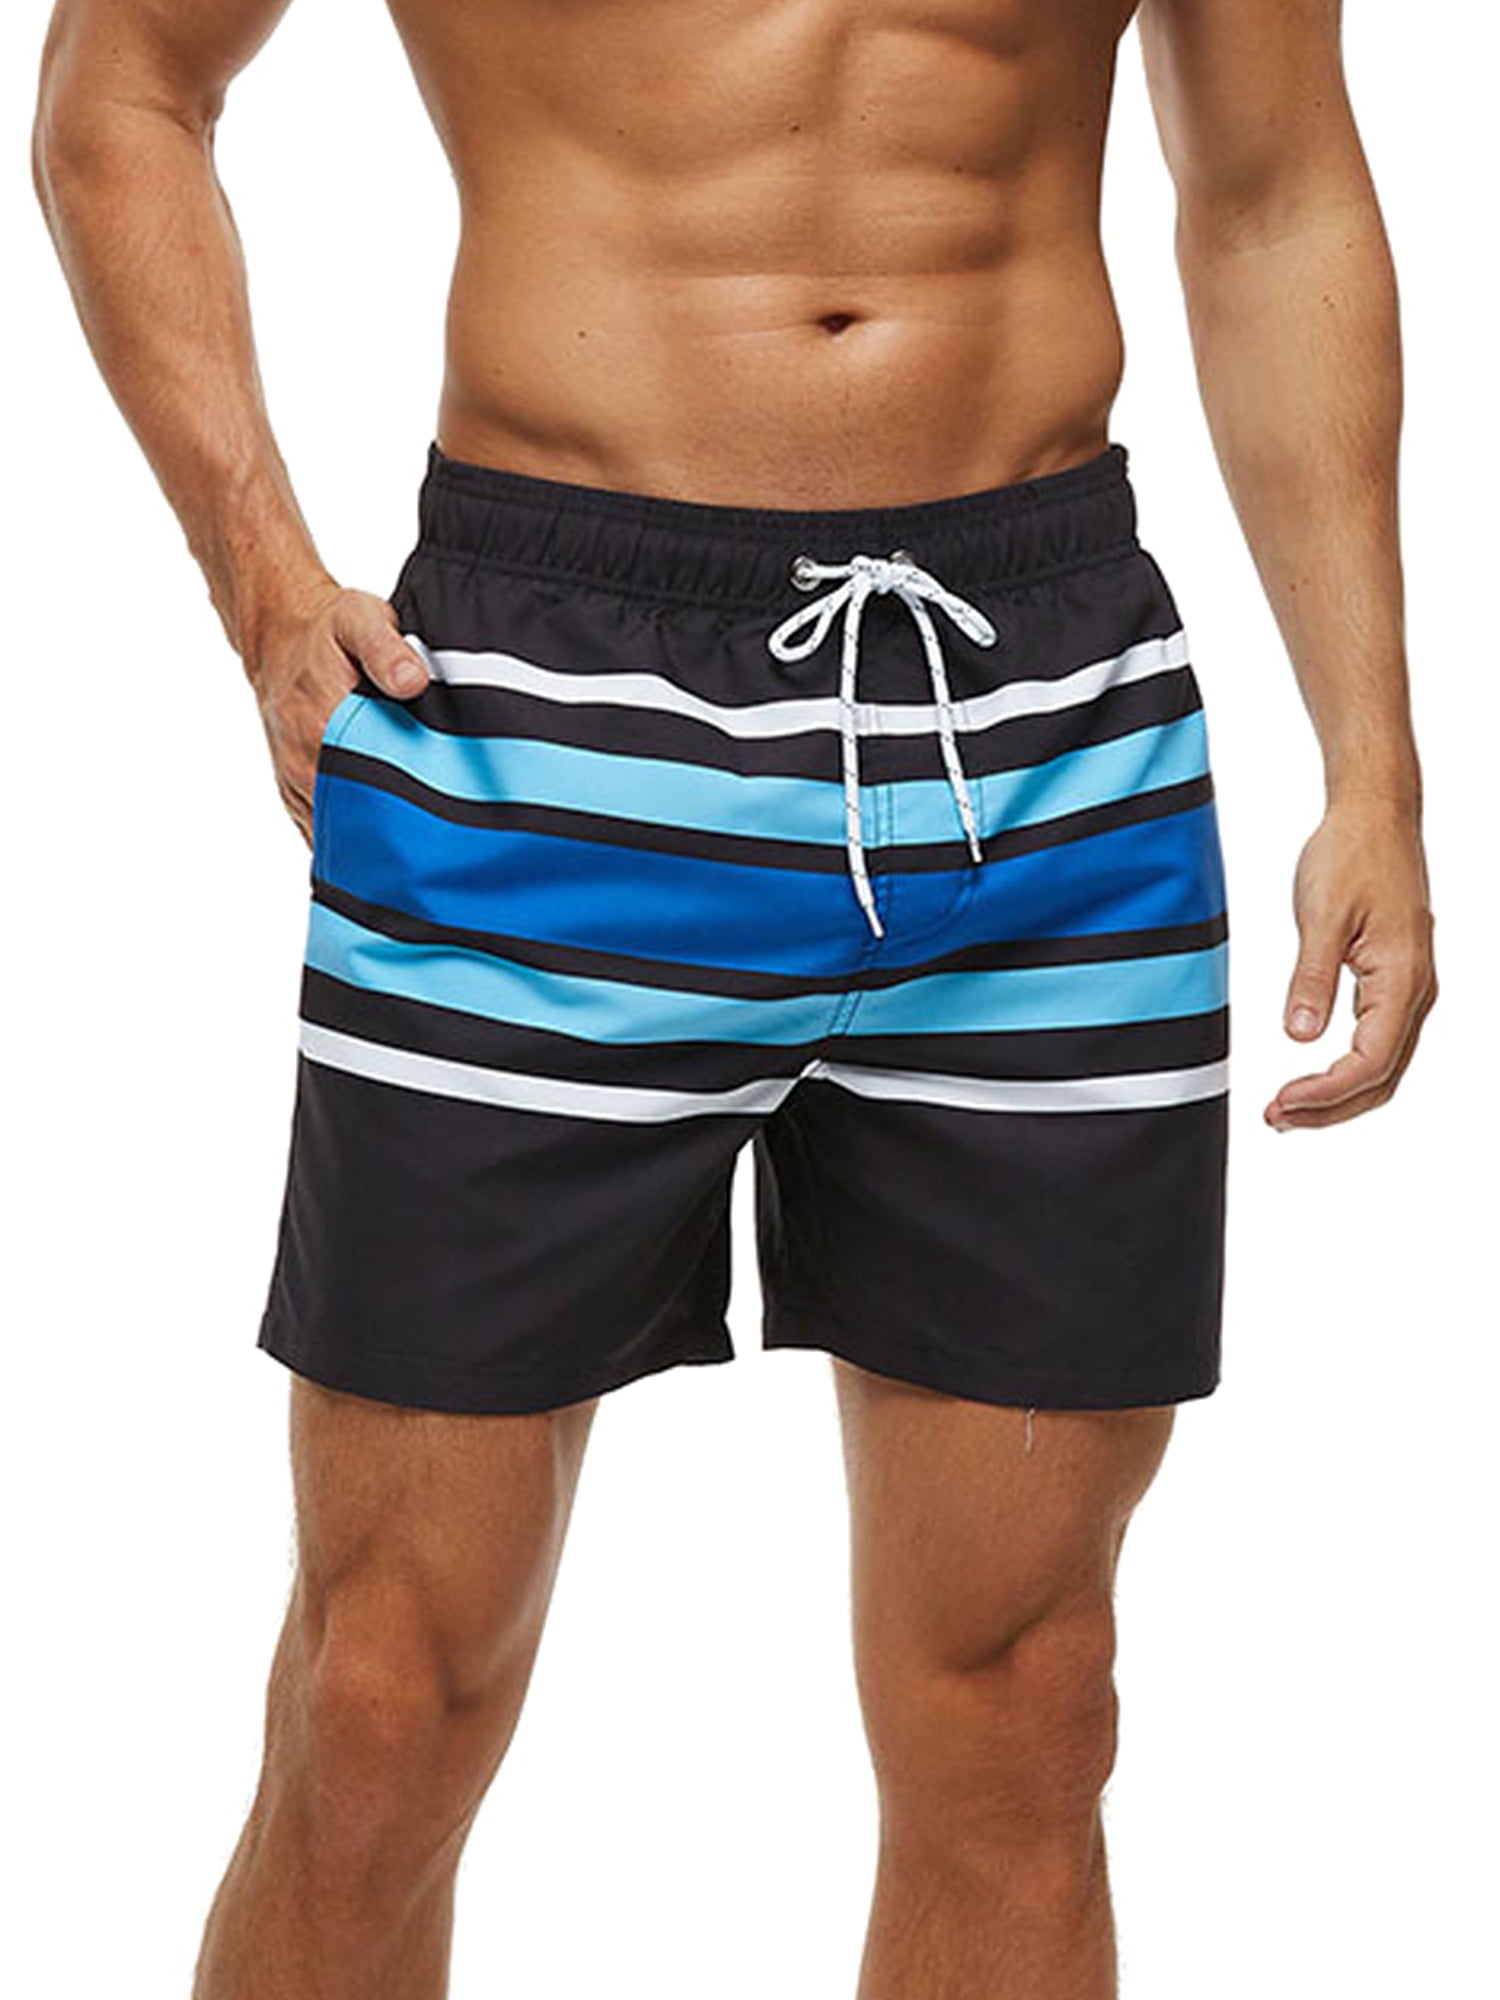 B-xww Mens Summer Surf Swim Trunks Beach Shorts Pants Quick Dry Pockets 